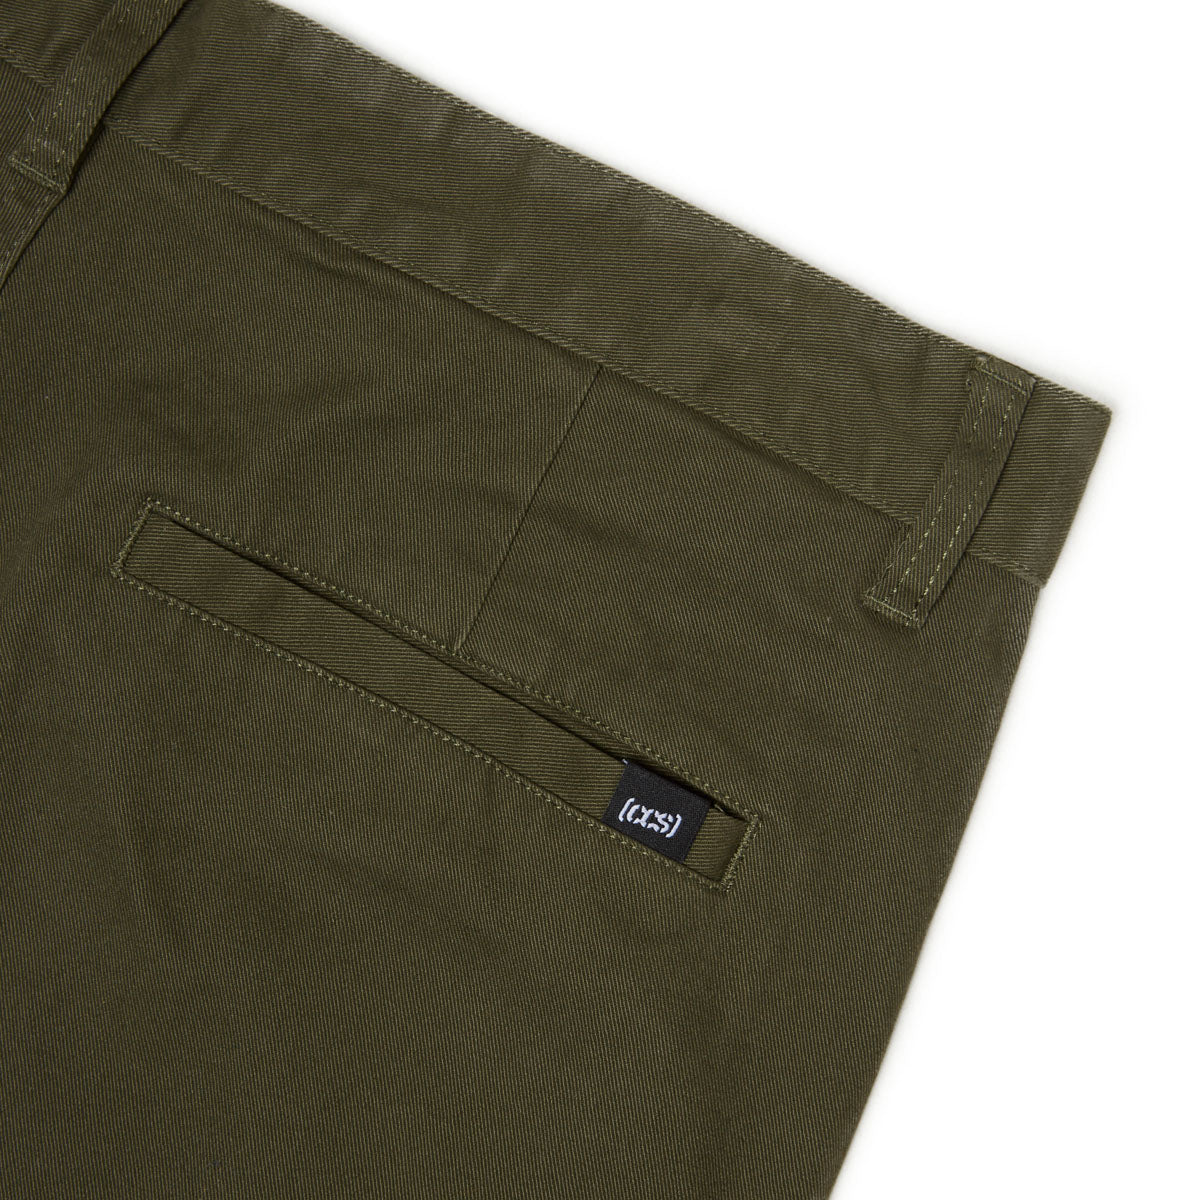 CCS Standard Plus Straight Chino Pants - Olive image 6